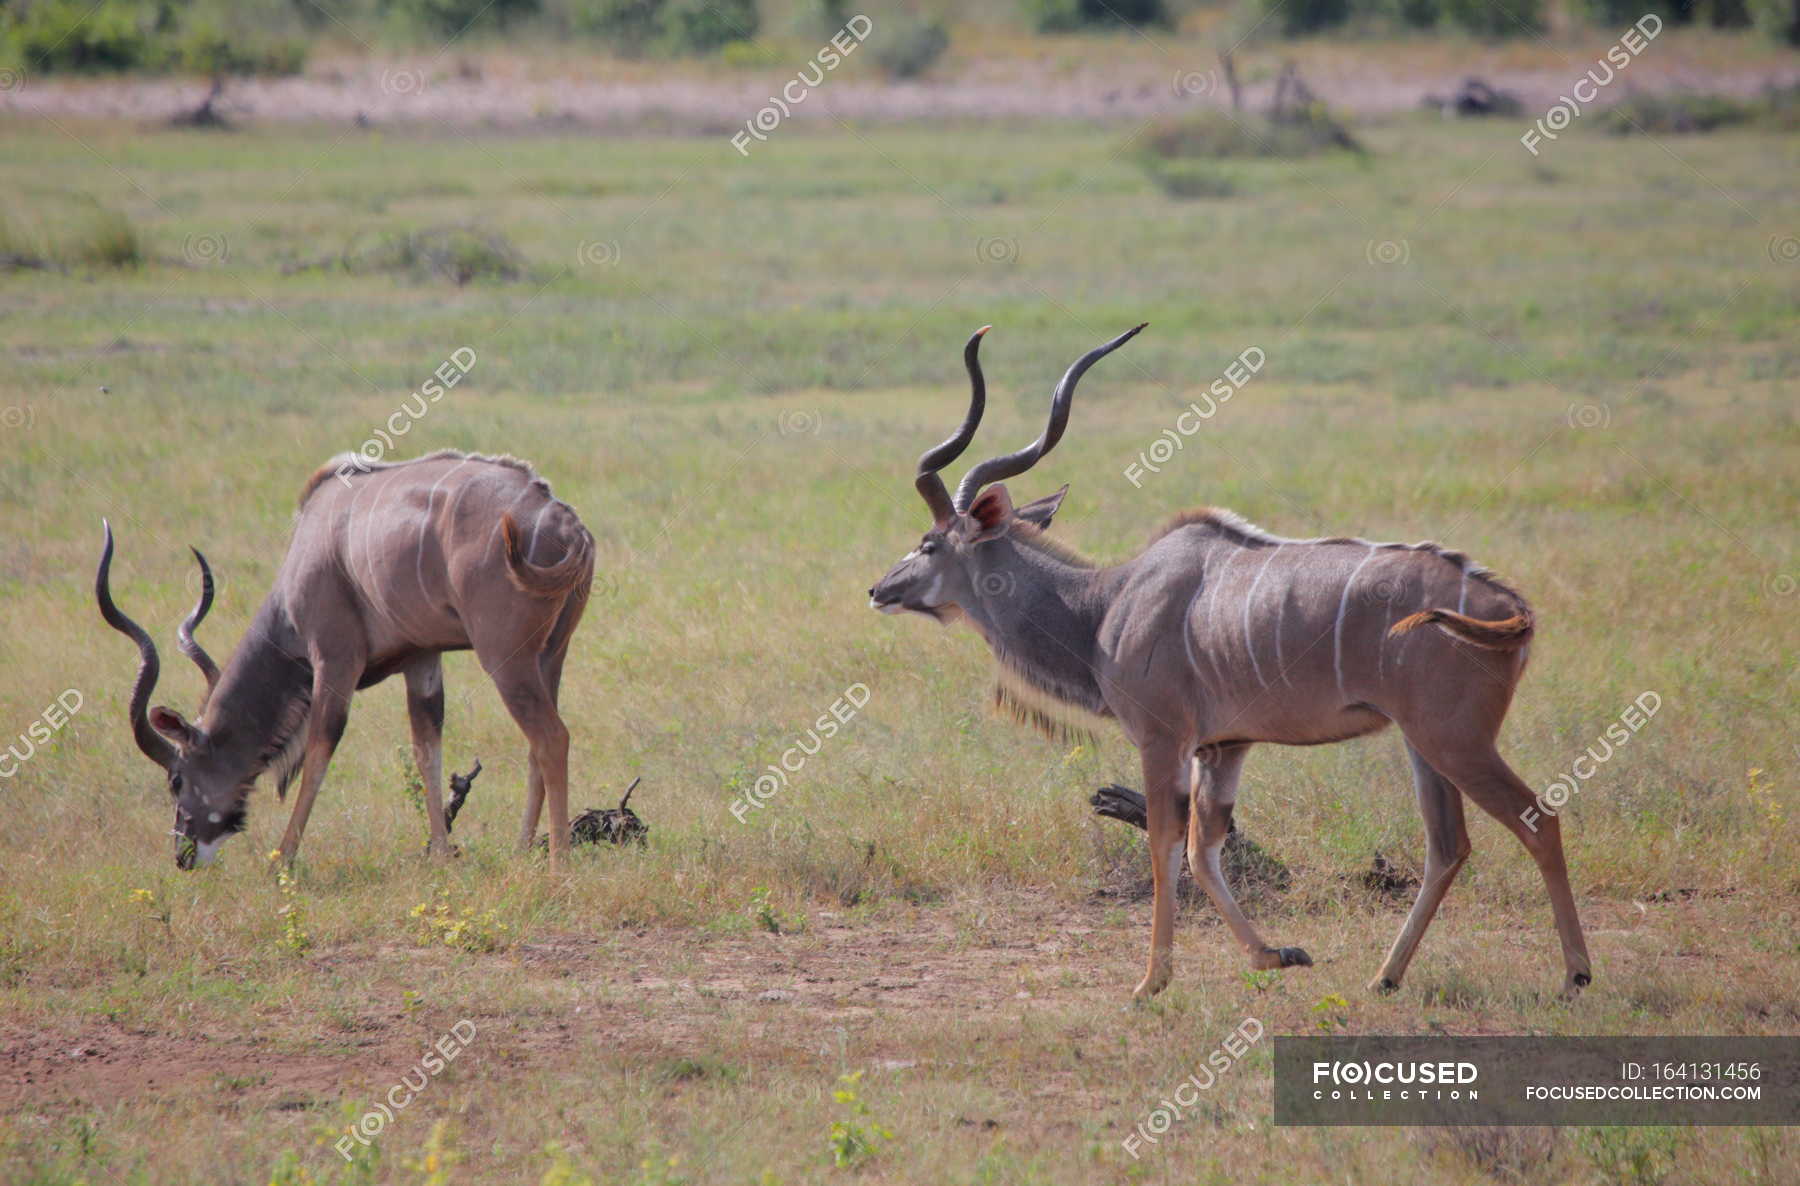 Wild gazelles at savanna — Stock Photo | #164131456